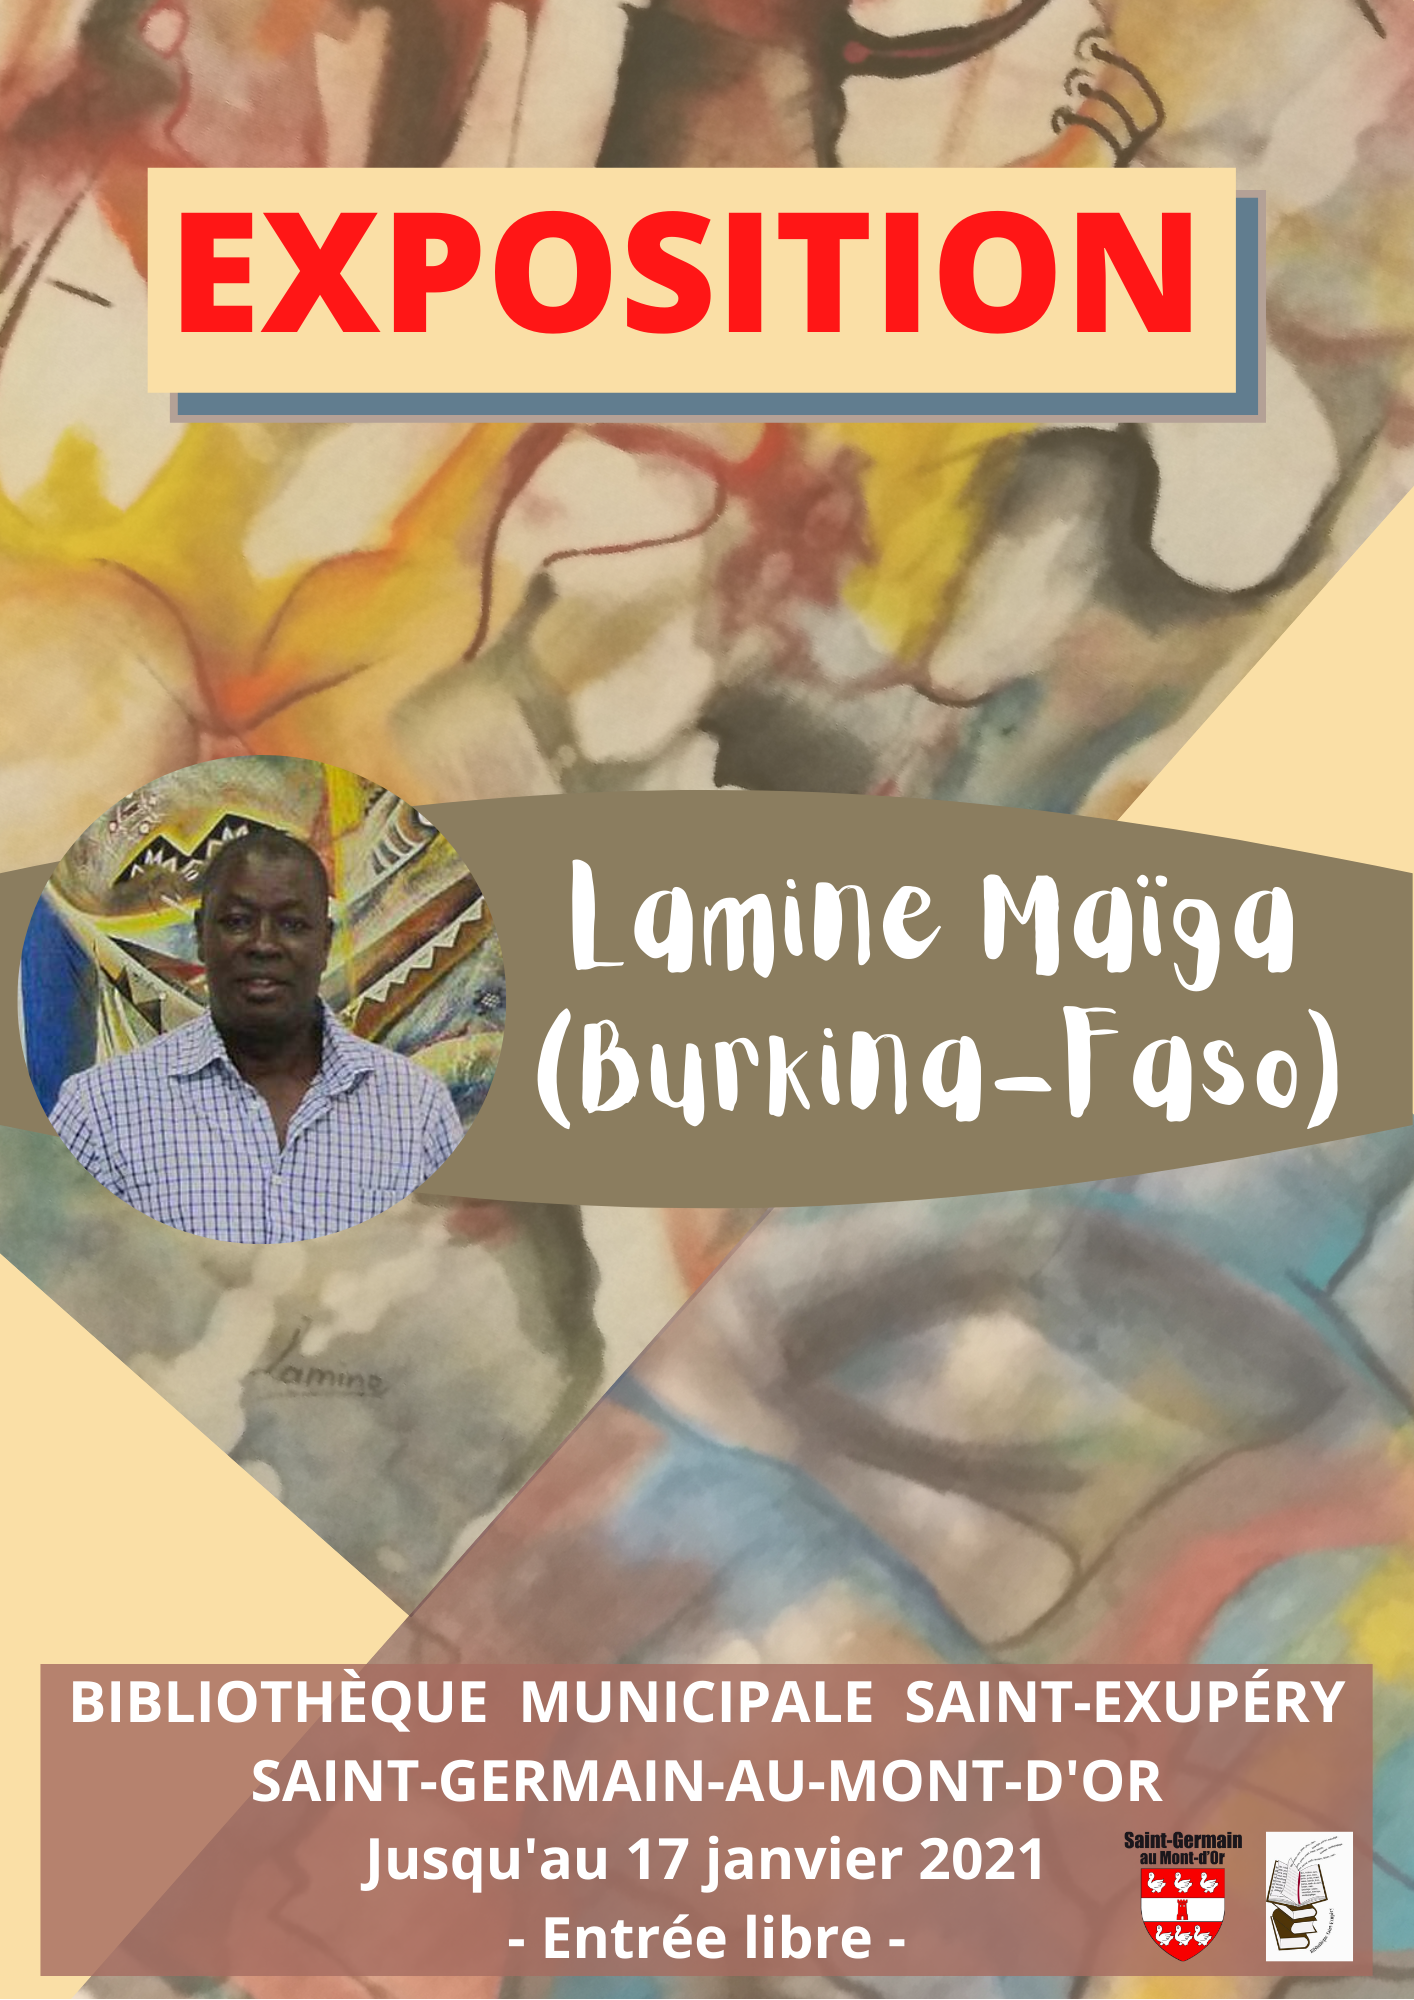 Exposition de Lamine Maïga (Burkina Faso) jusqu'au 17 janvier 2021.